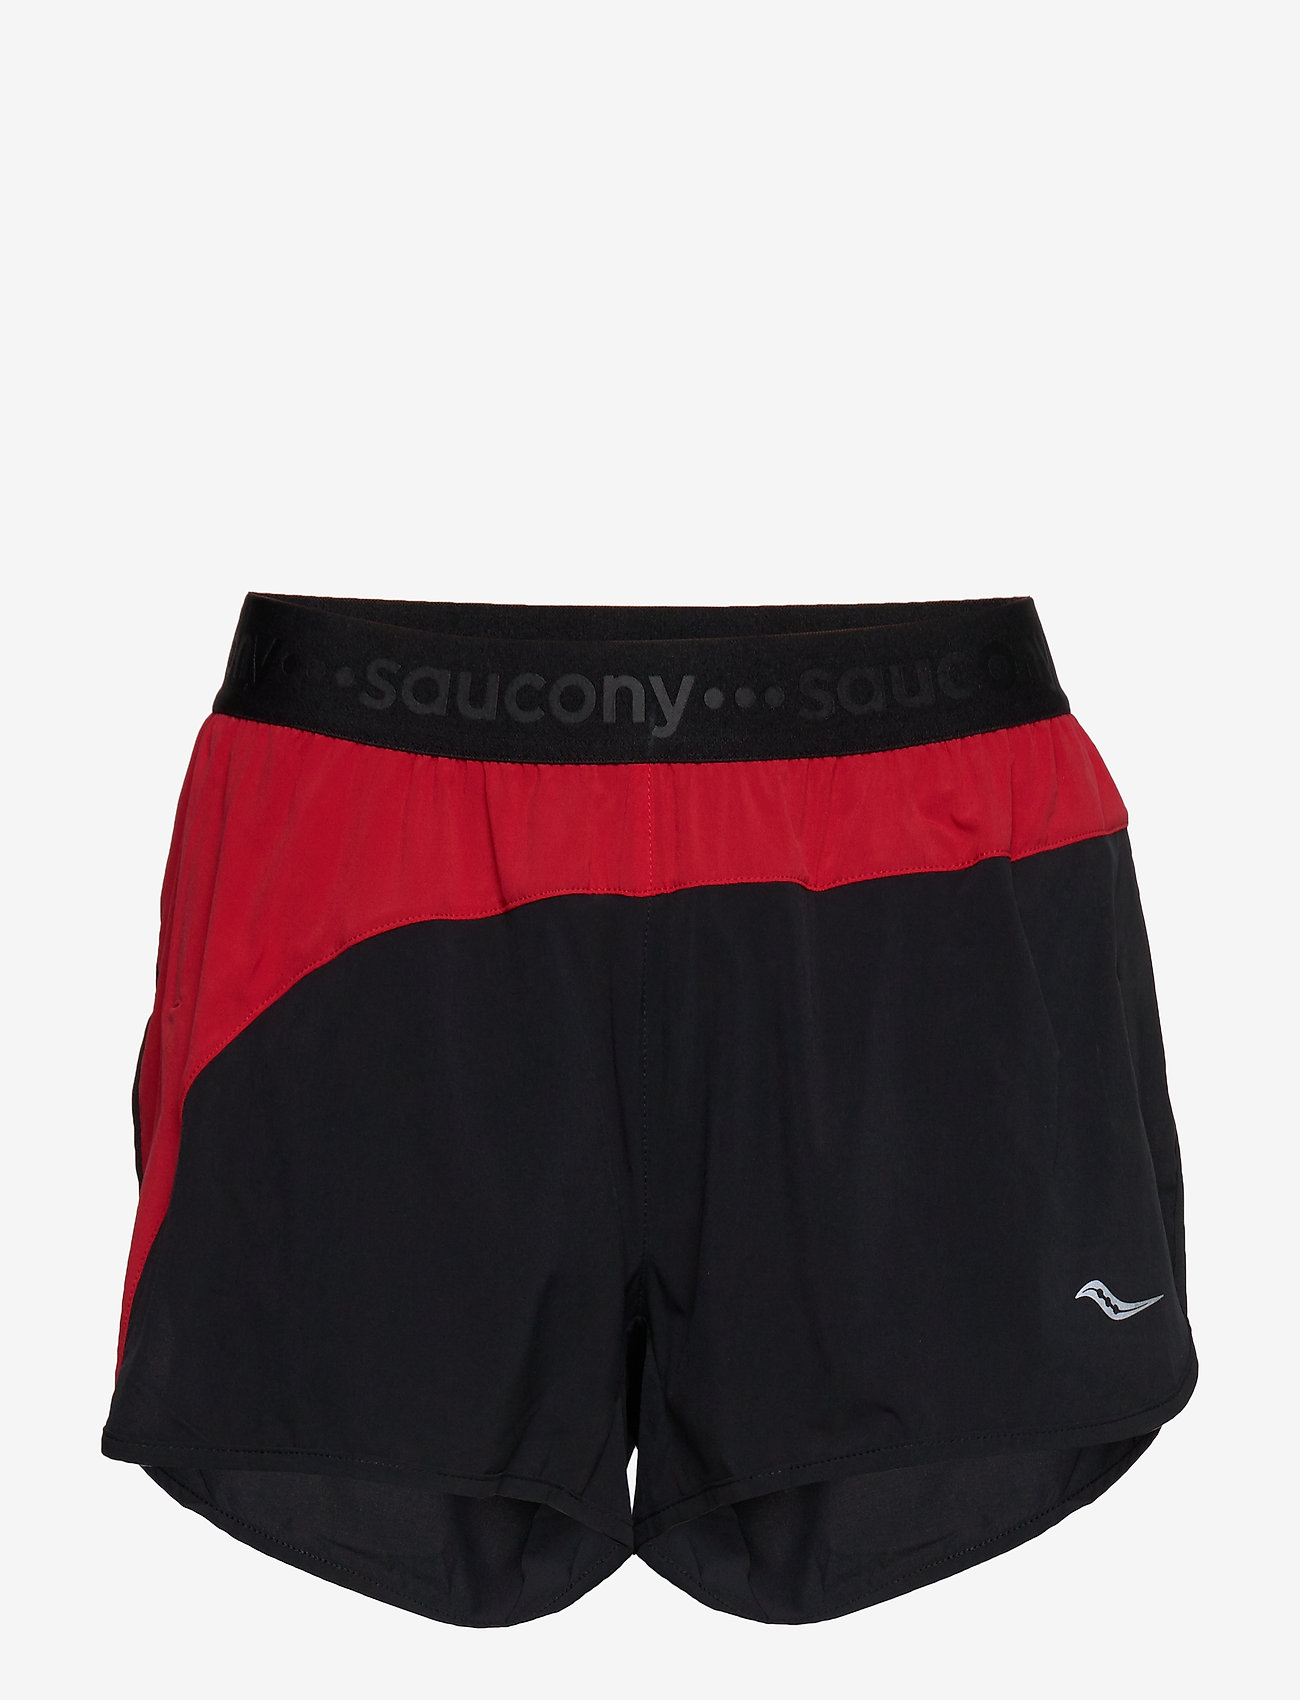 saucony split shorts